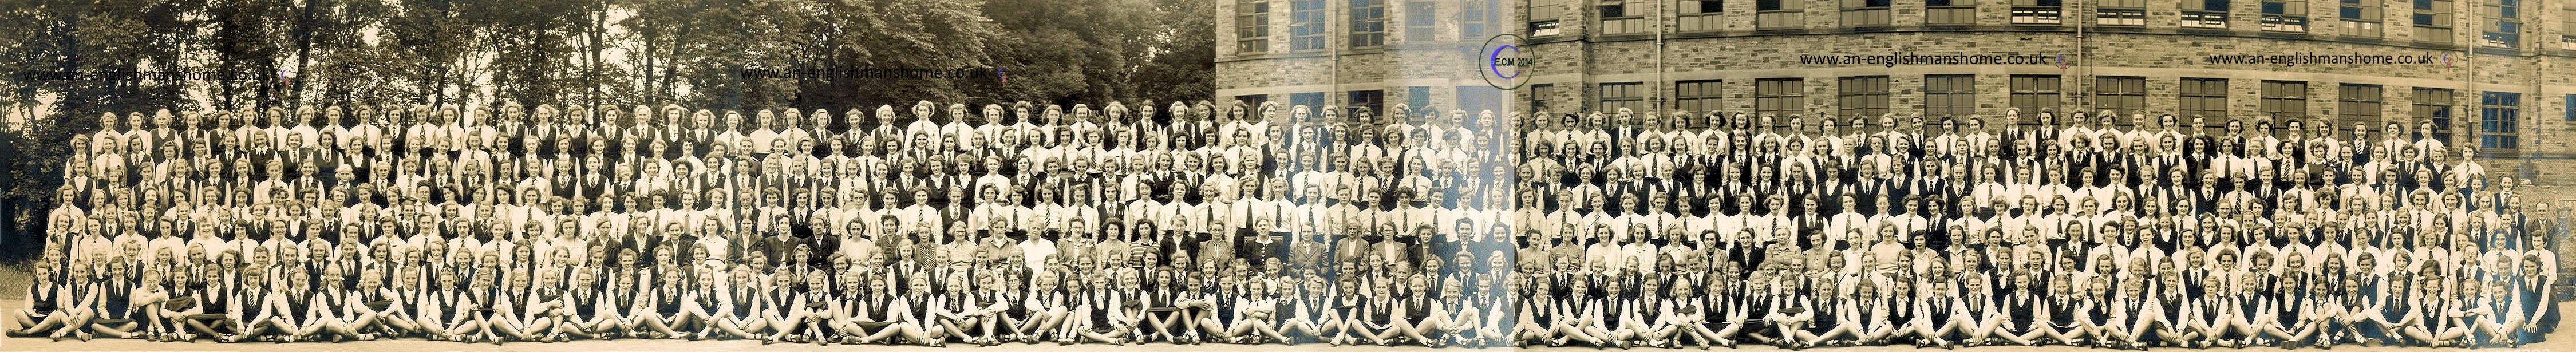 Bradford Girls Grammar School 1949.